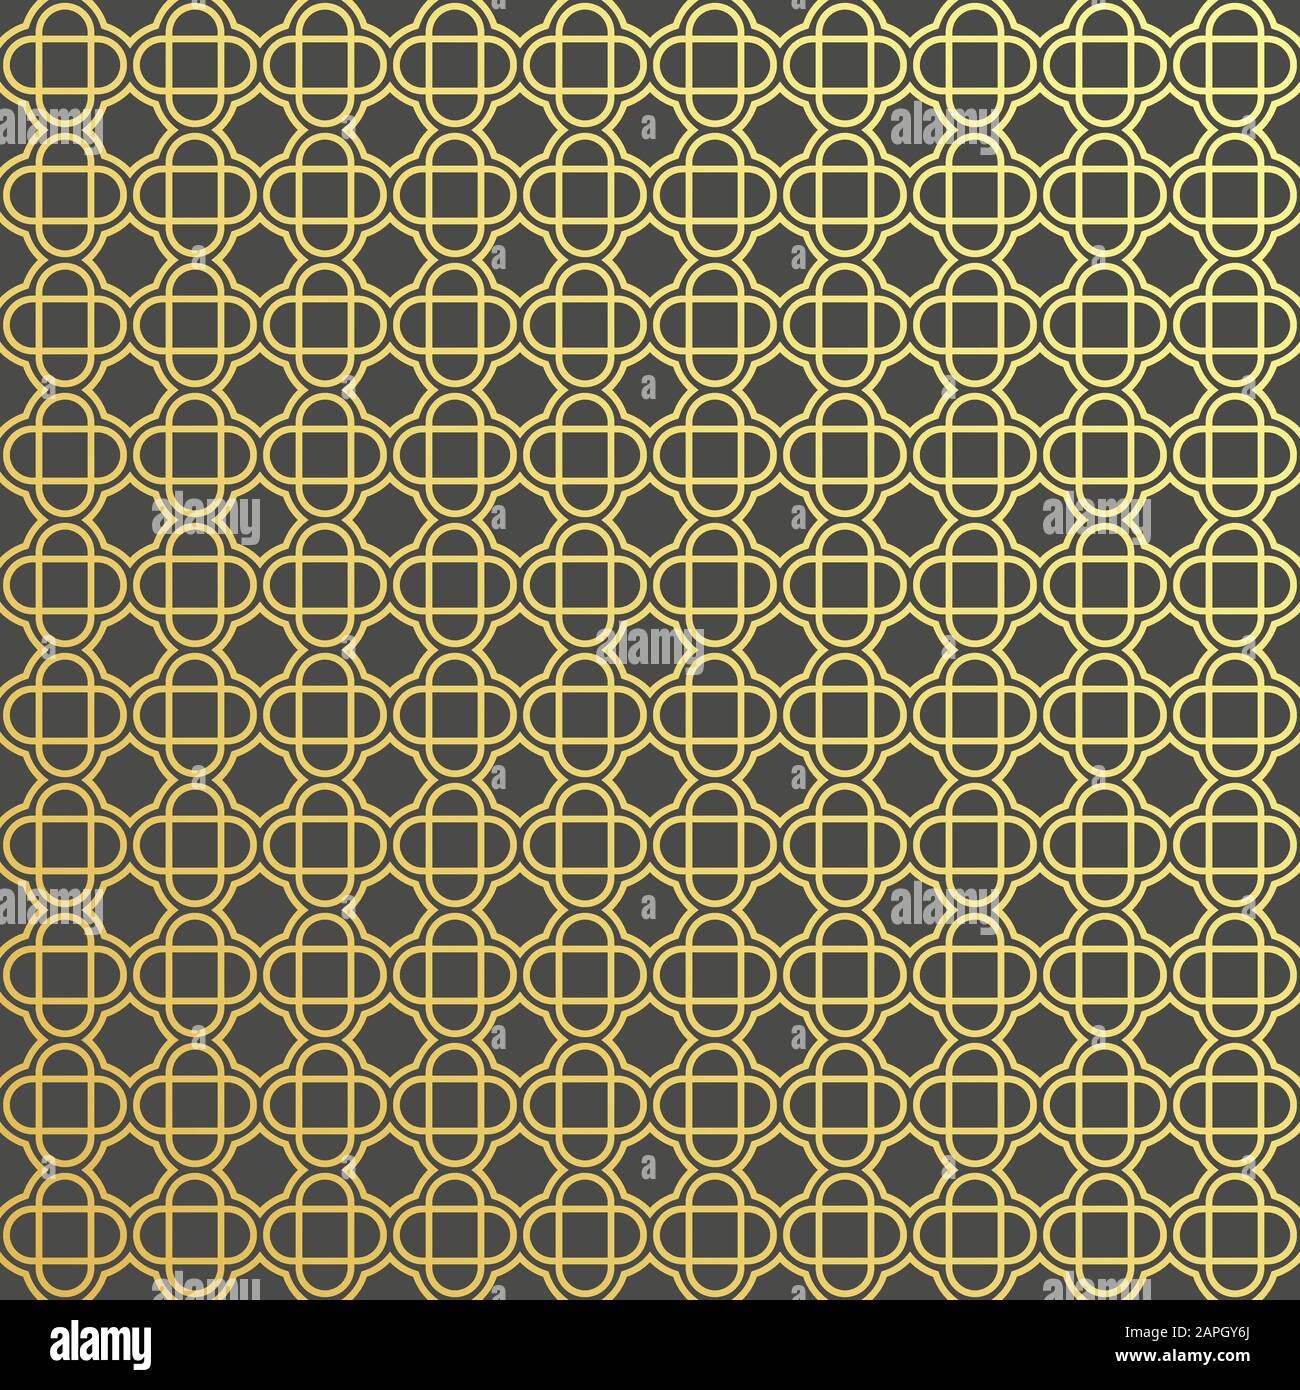 Islamische ornament Vector, traditionelle arabische Kunst, islamische Geometrische kreisförmige Zierpflanzen. Für Gewebe, Textil, Verpackung Papier - Abstrakt vector Bac Stock Vektor